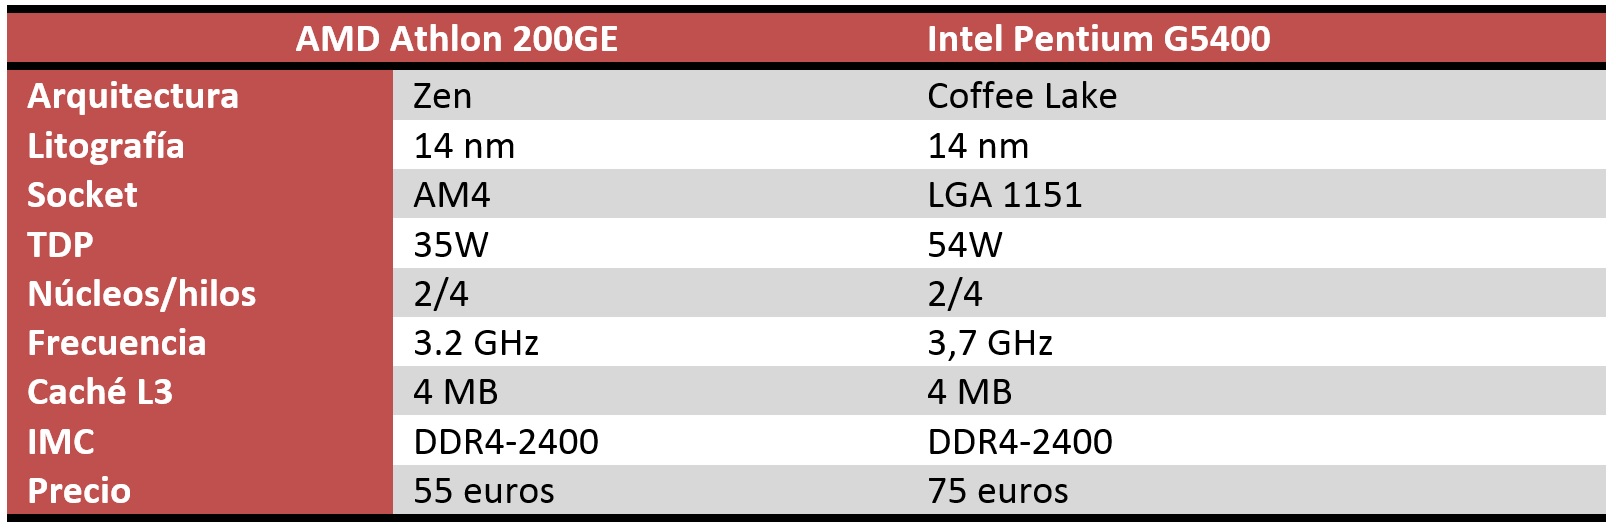 AMD Athlon 200GE vs Intel Pentium G5400